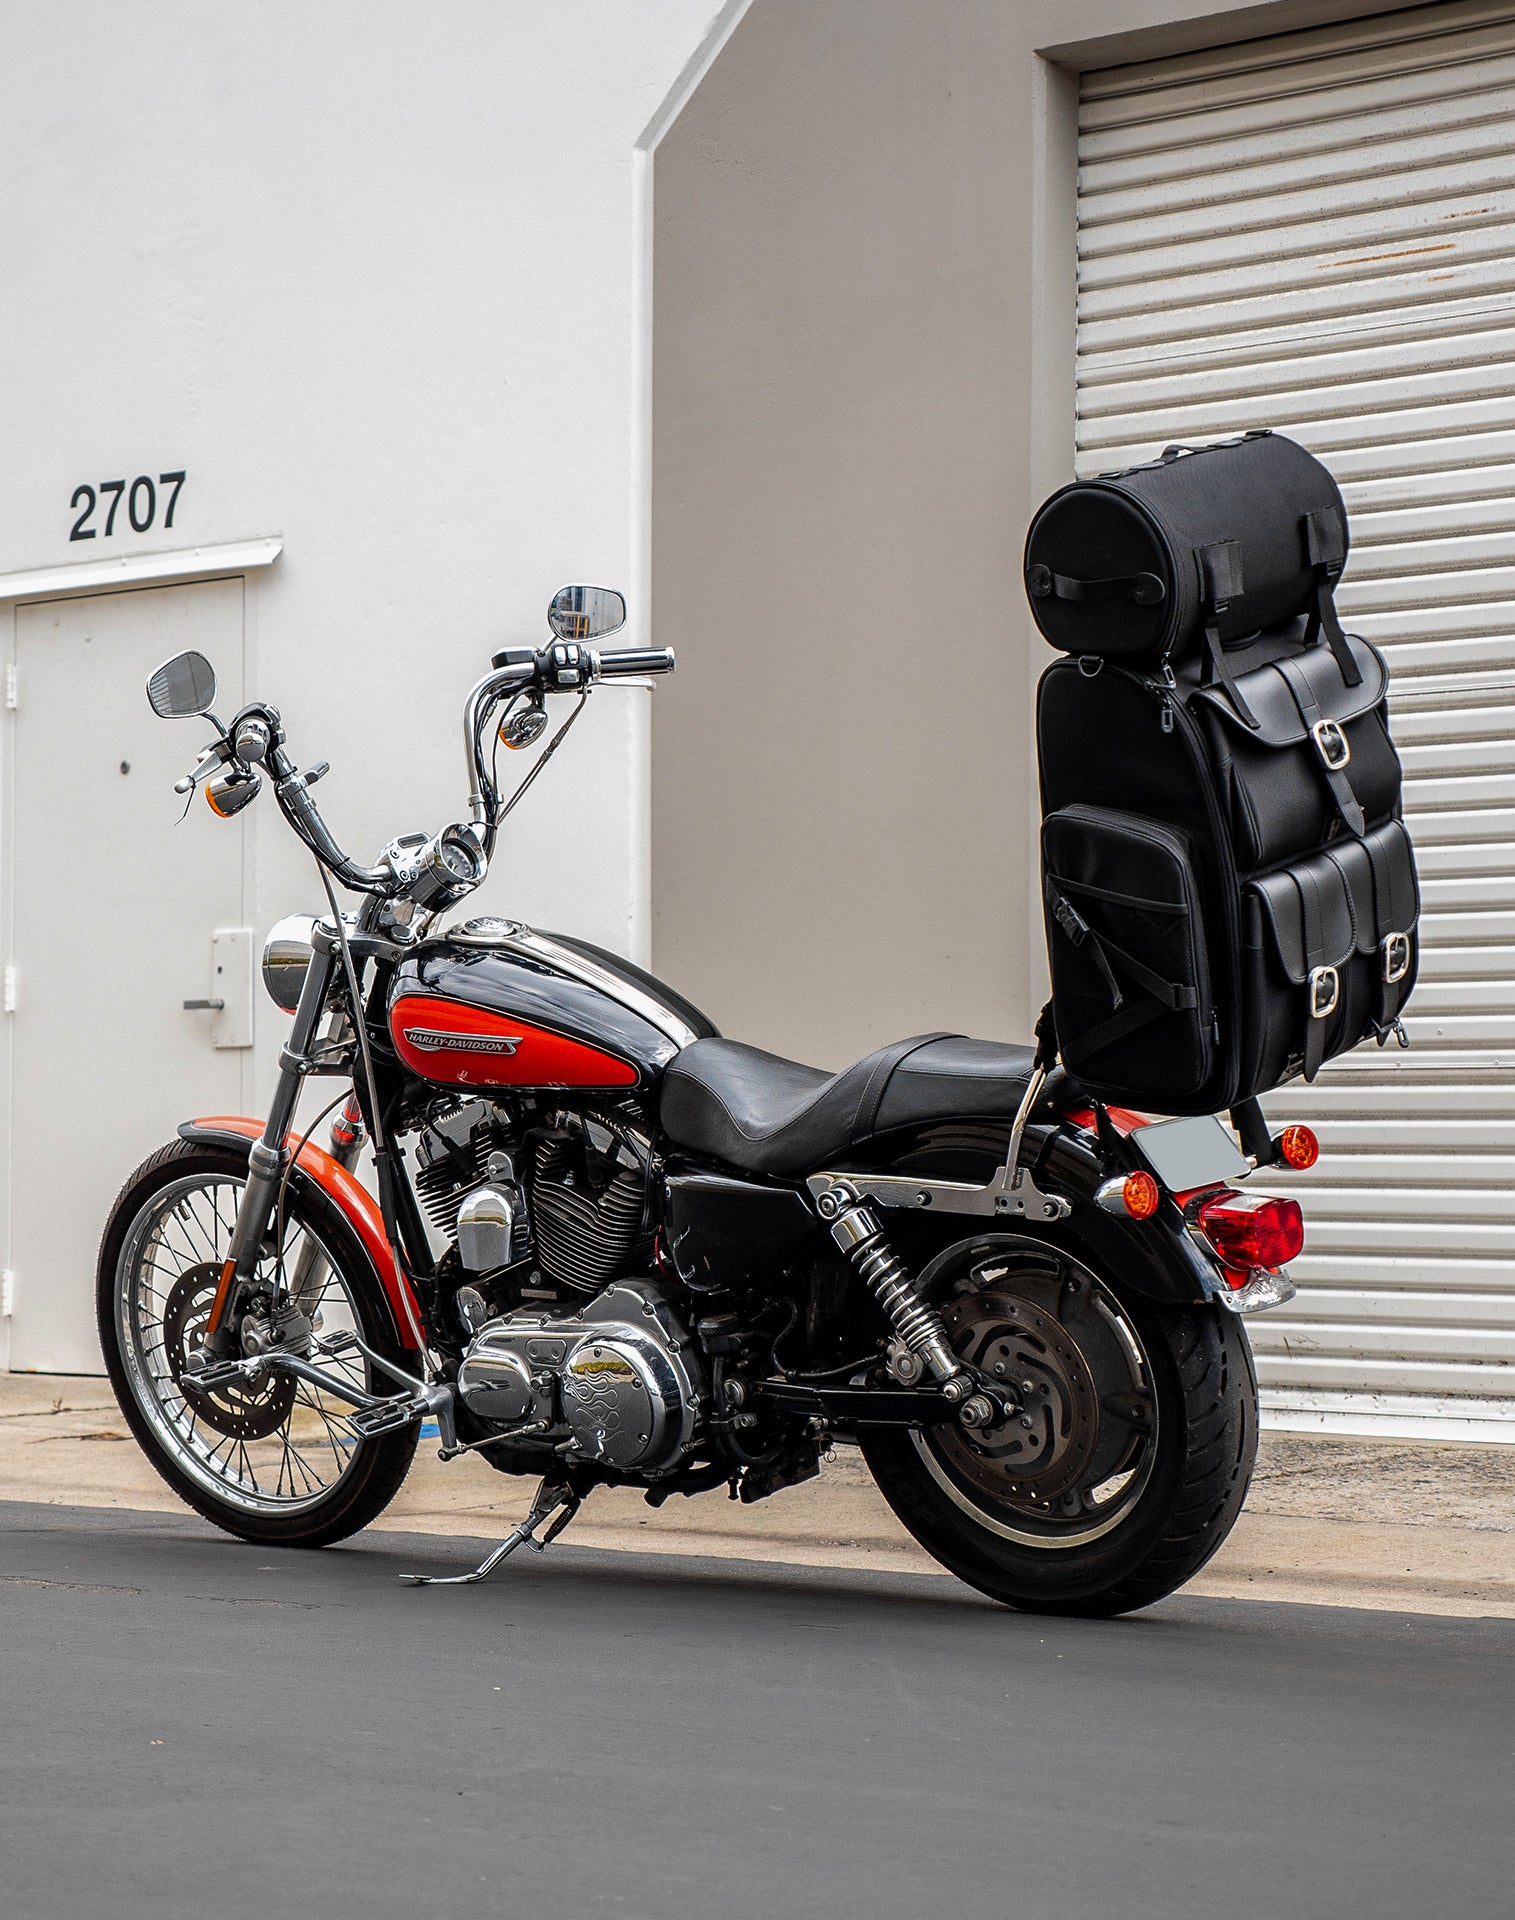 55L - Highway Extra Large Plain Indian Motorcycle Sissy Bar Bag